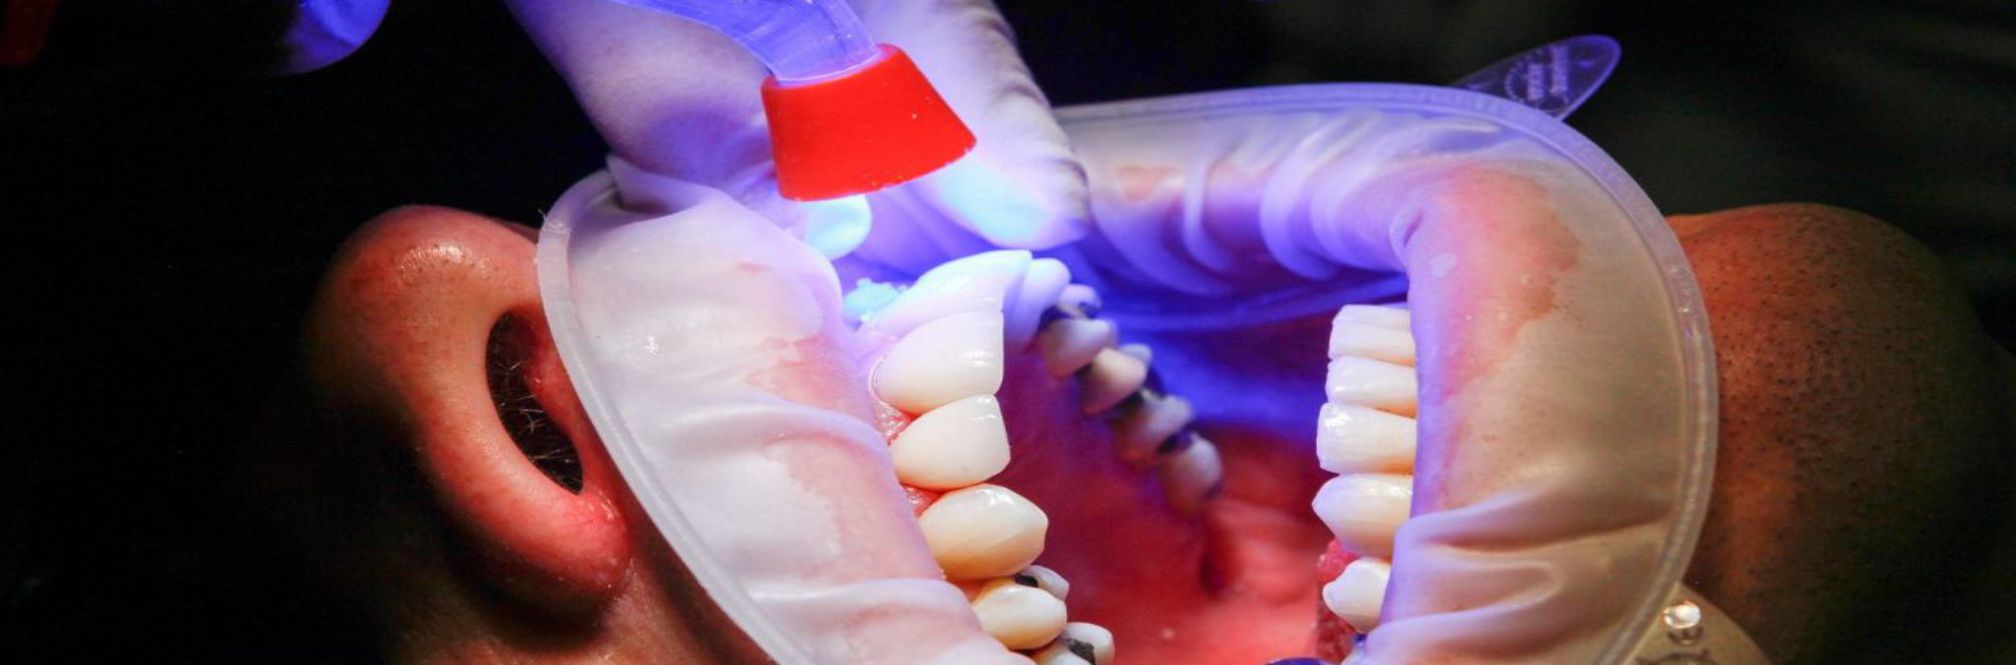 Профилактика и гигиена зубов